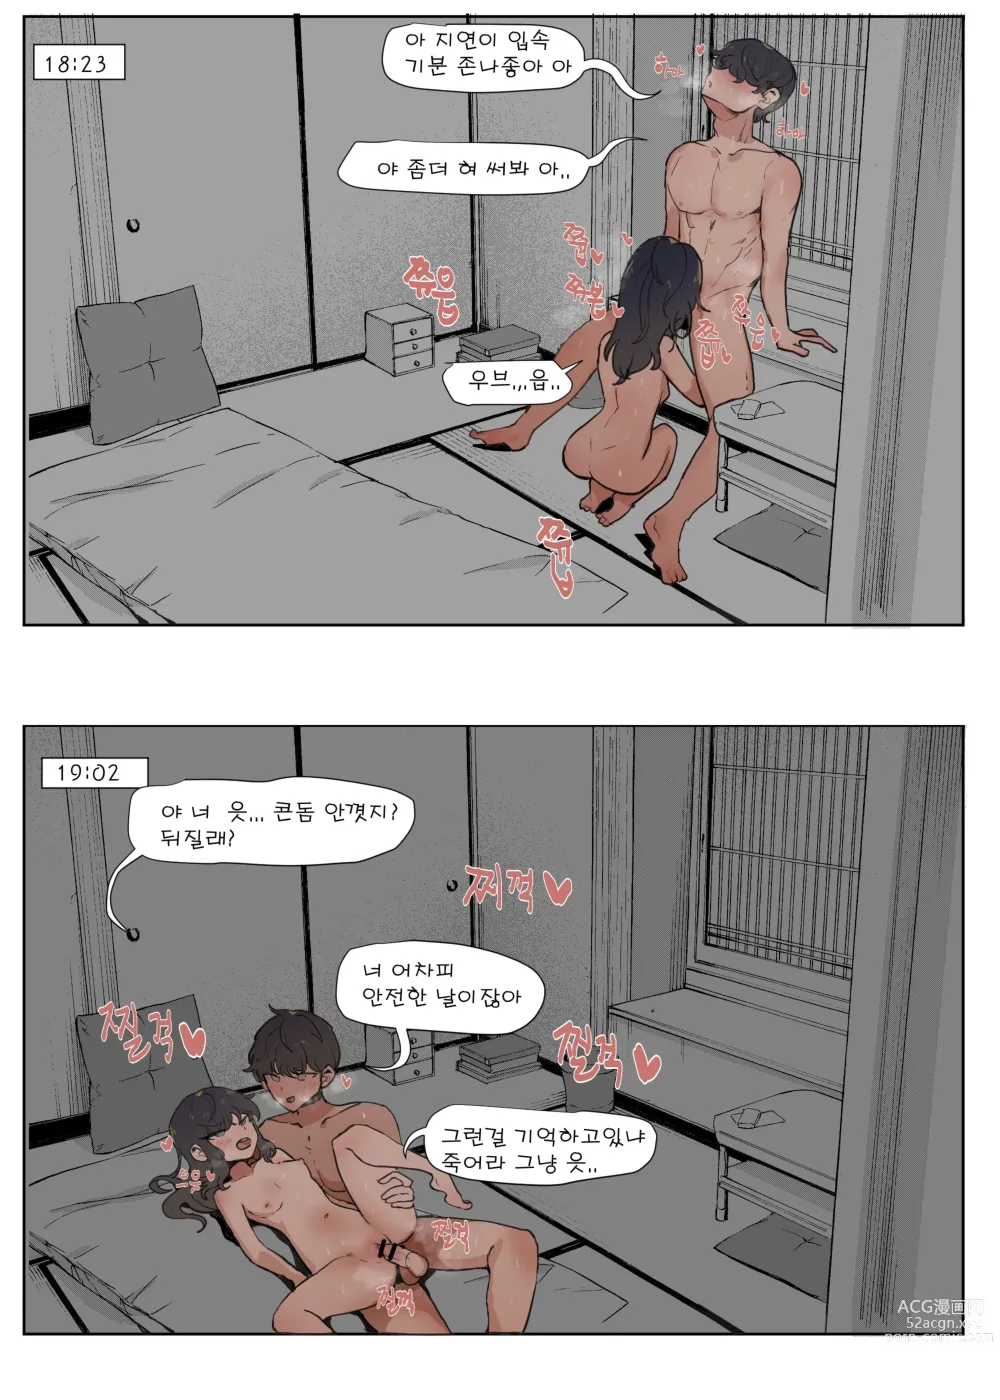 Page 9 of doujinshi 여동생이랑 근친하는 만화 6